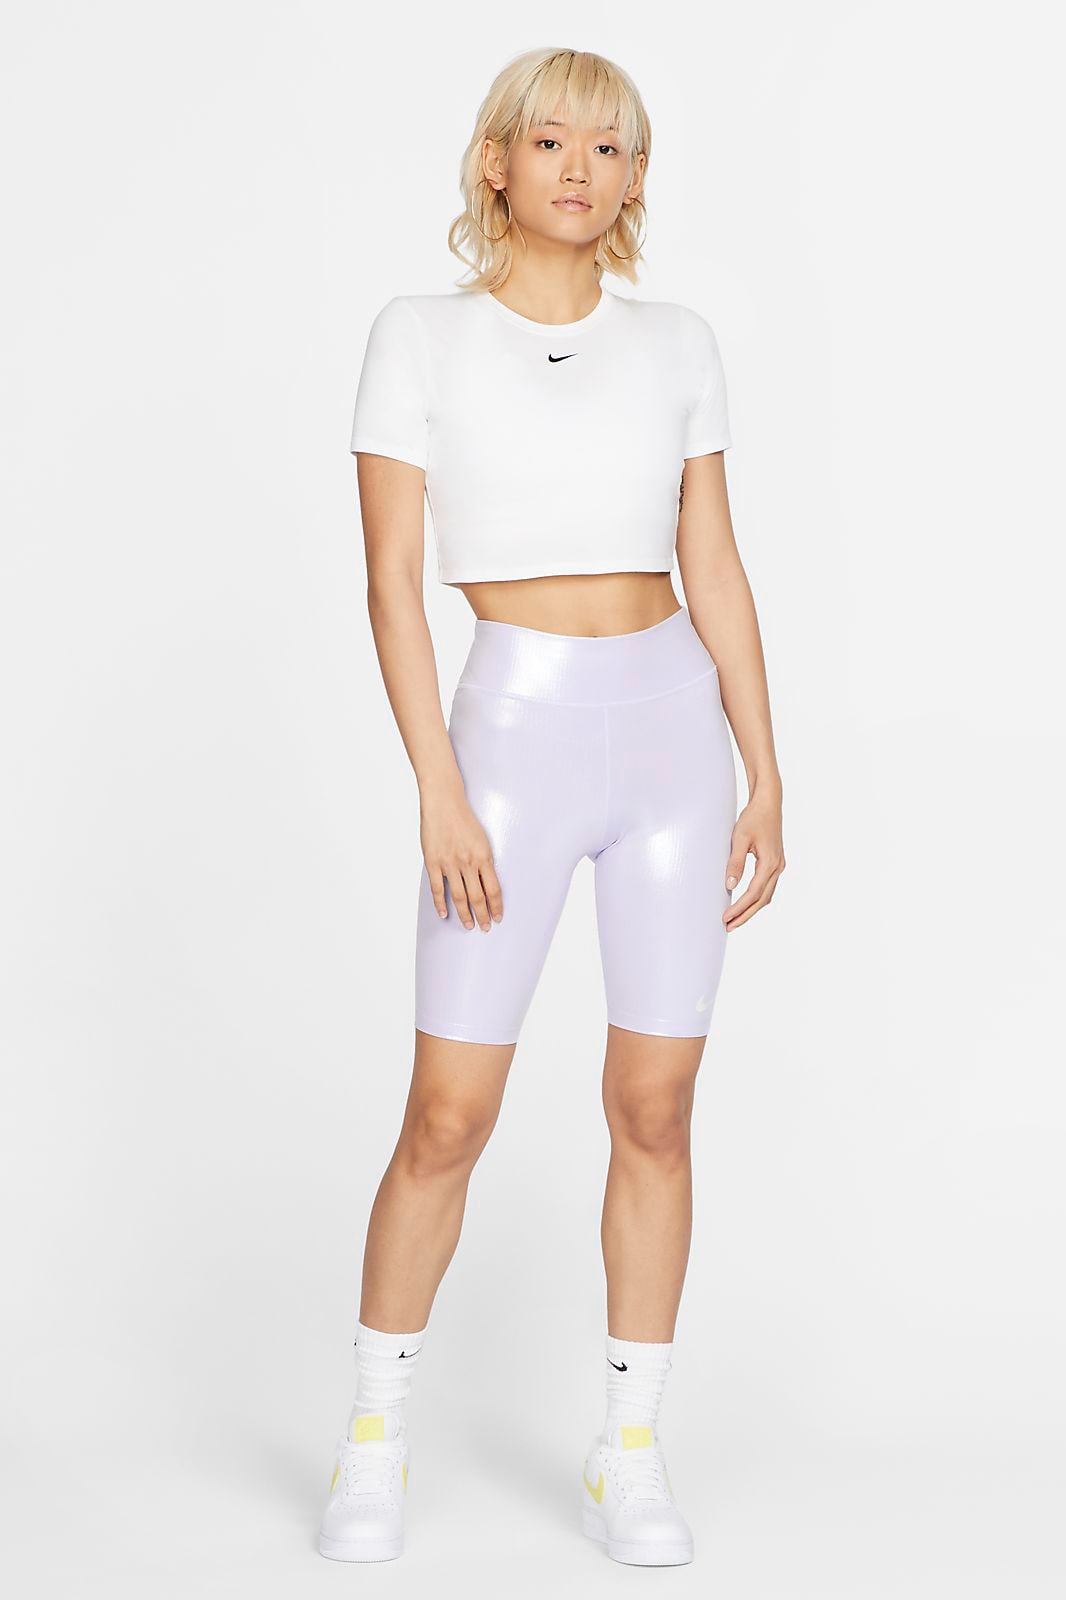 Nike Iridescent Oxygen Purple Shiny Bike Shorts 90s Trend Sportswear